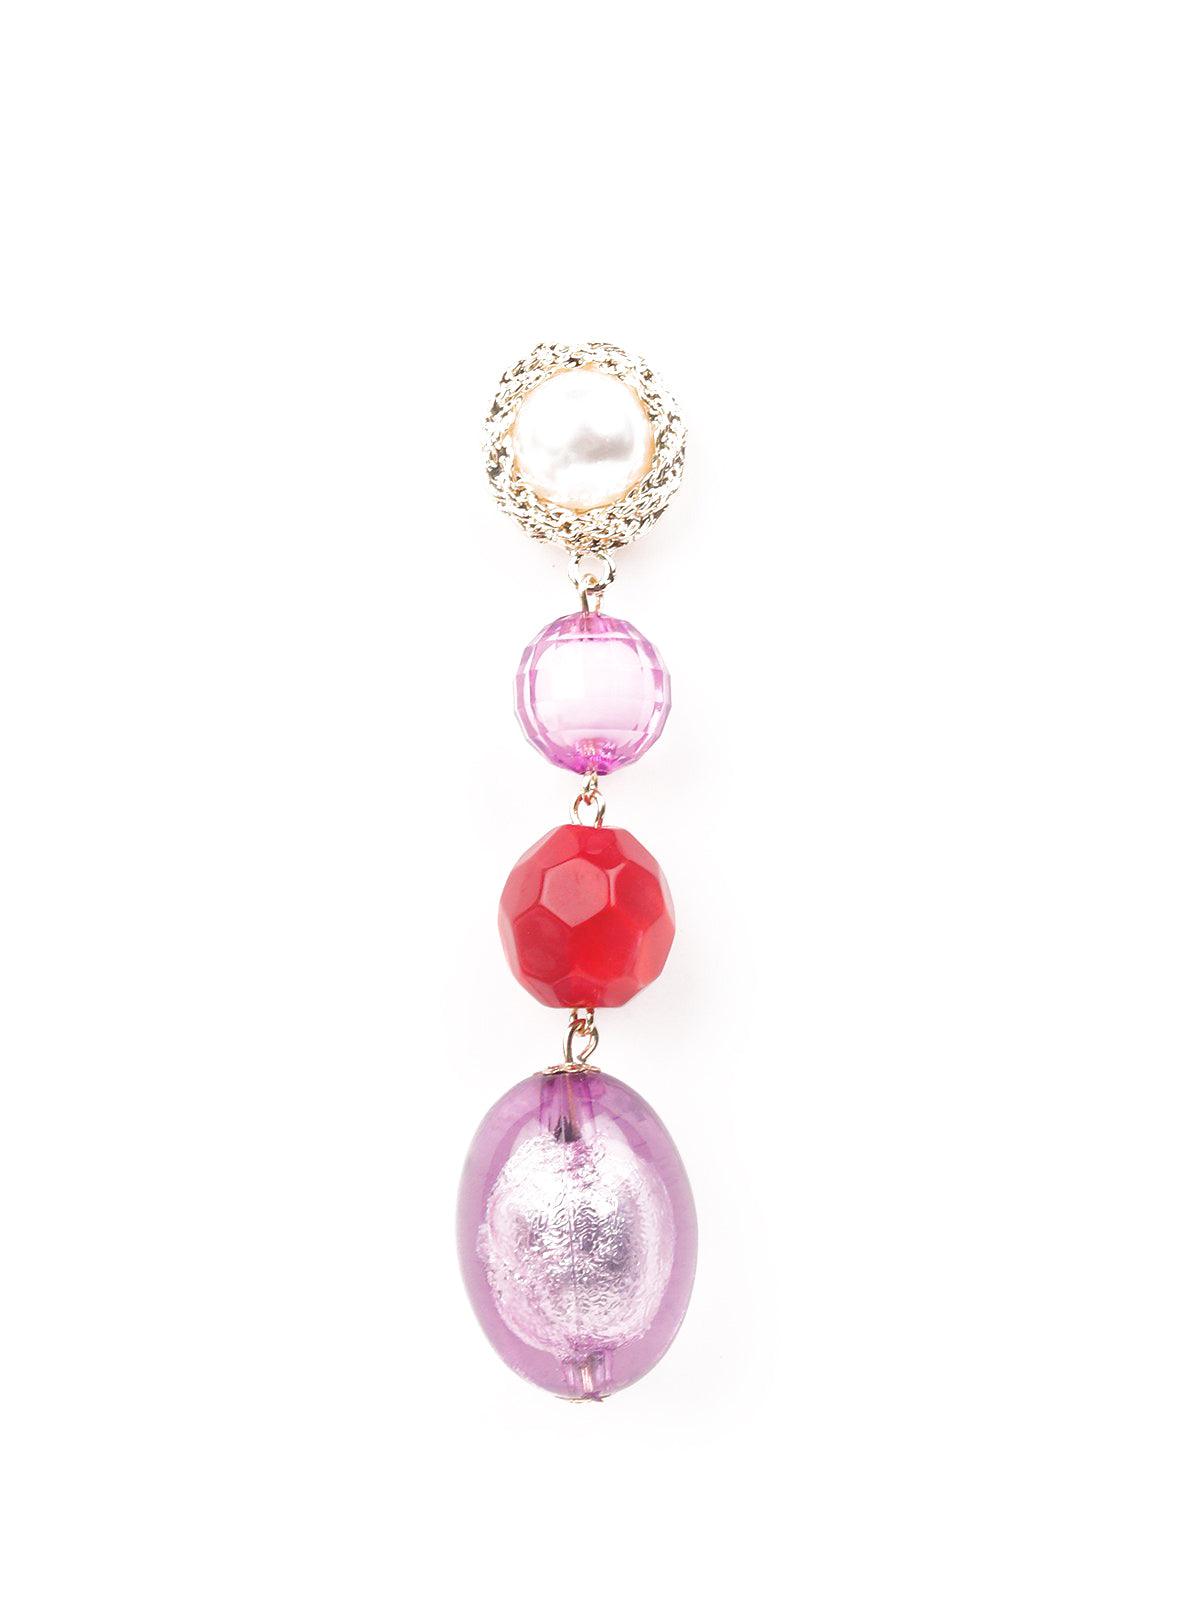 Purple And Red Beaded Drop Earrings - Odette